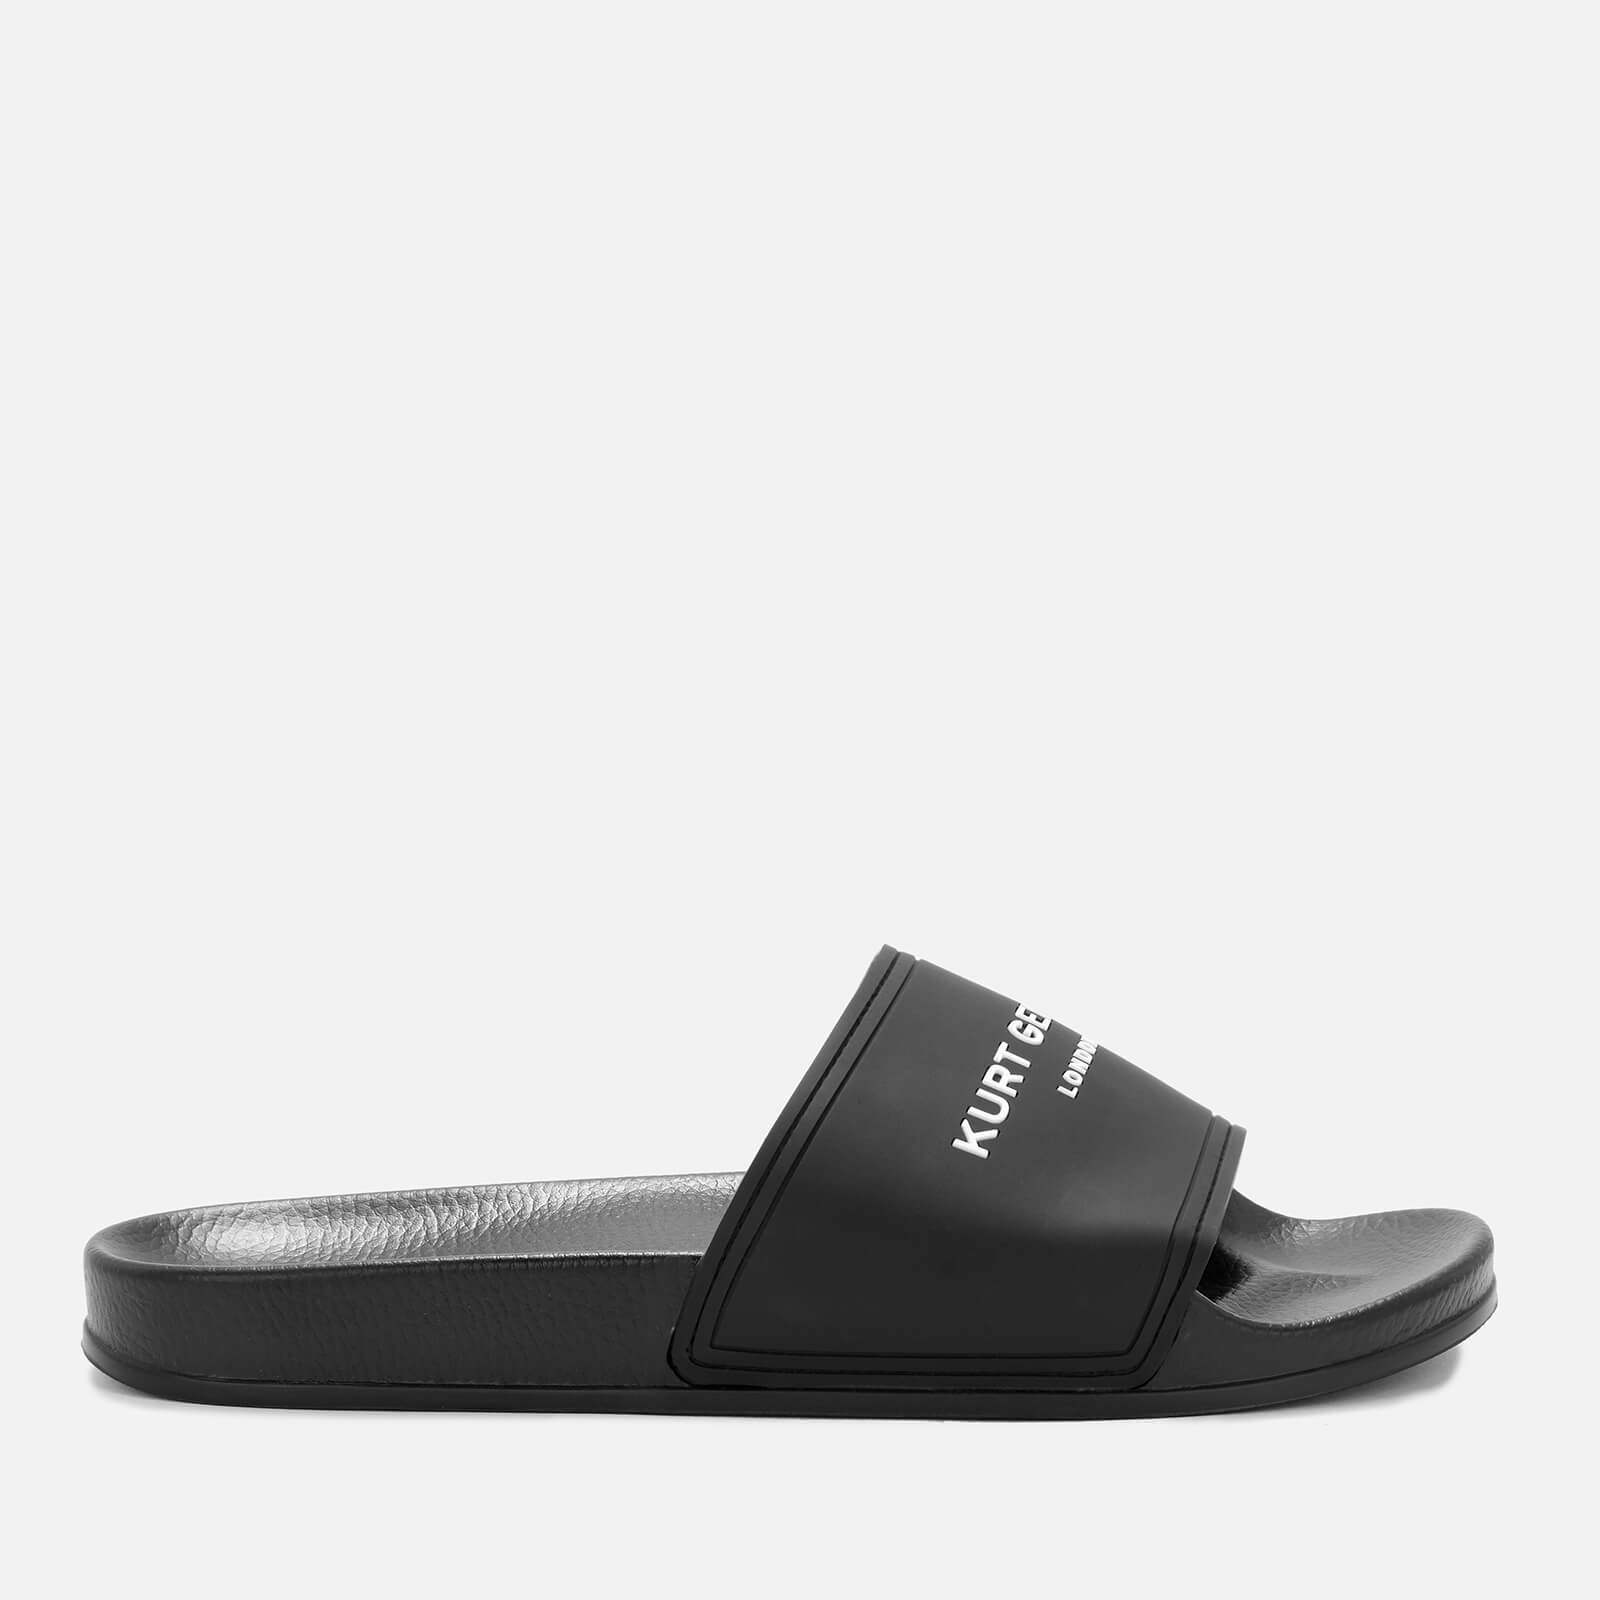 Kurt Geiger London Men's Slide Sandals - Black - UK 7